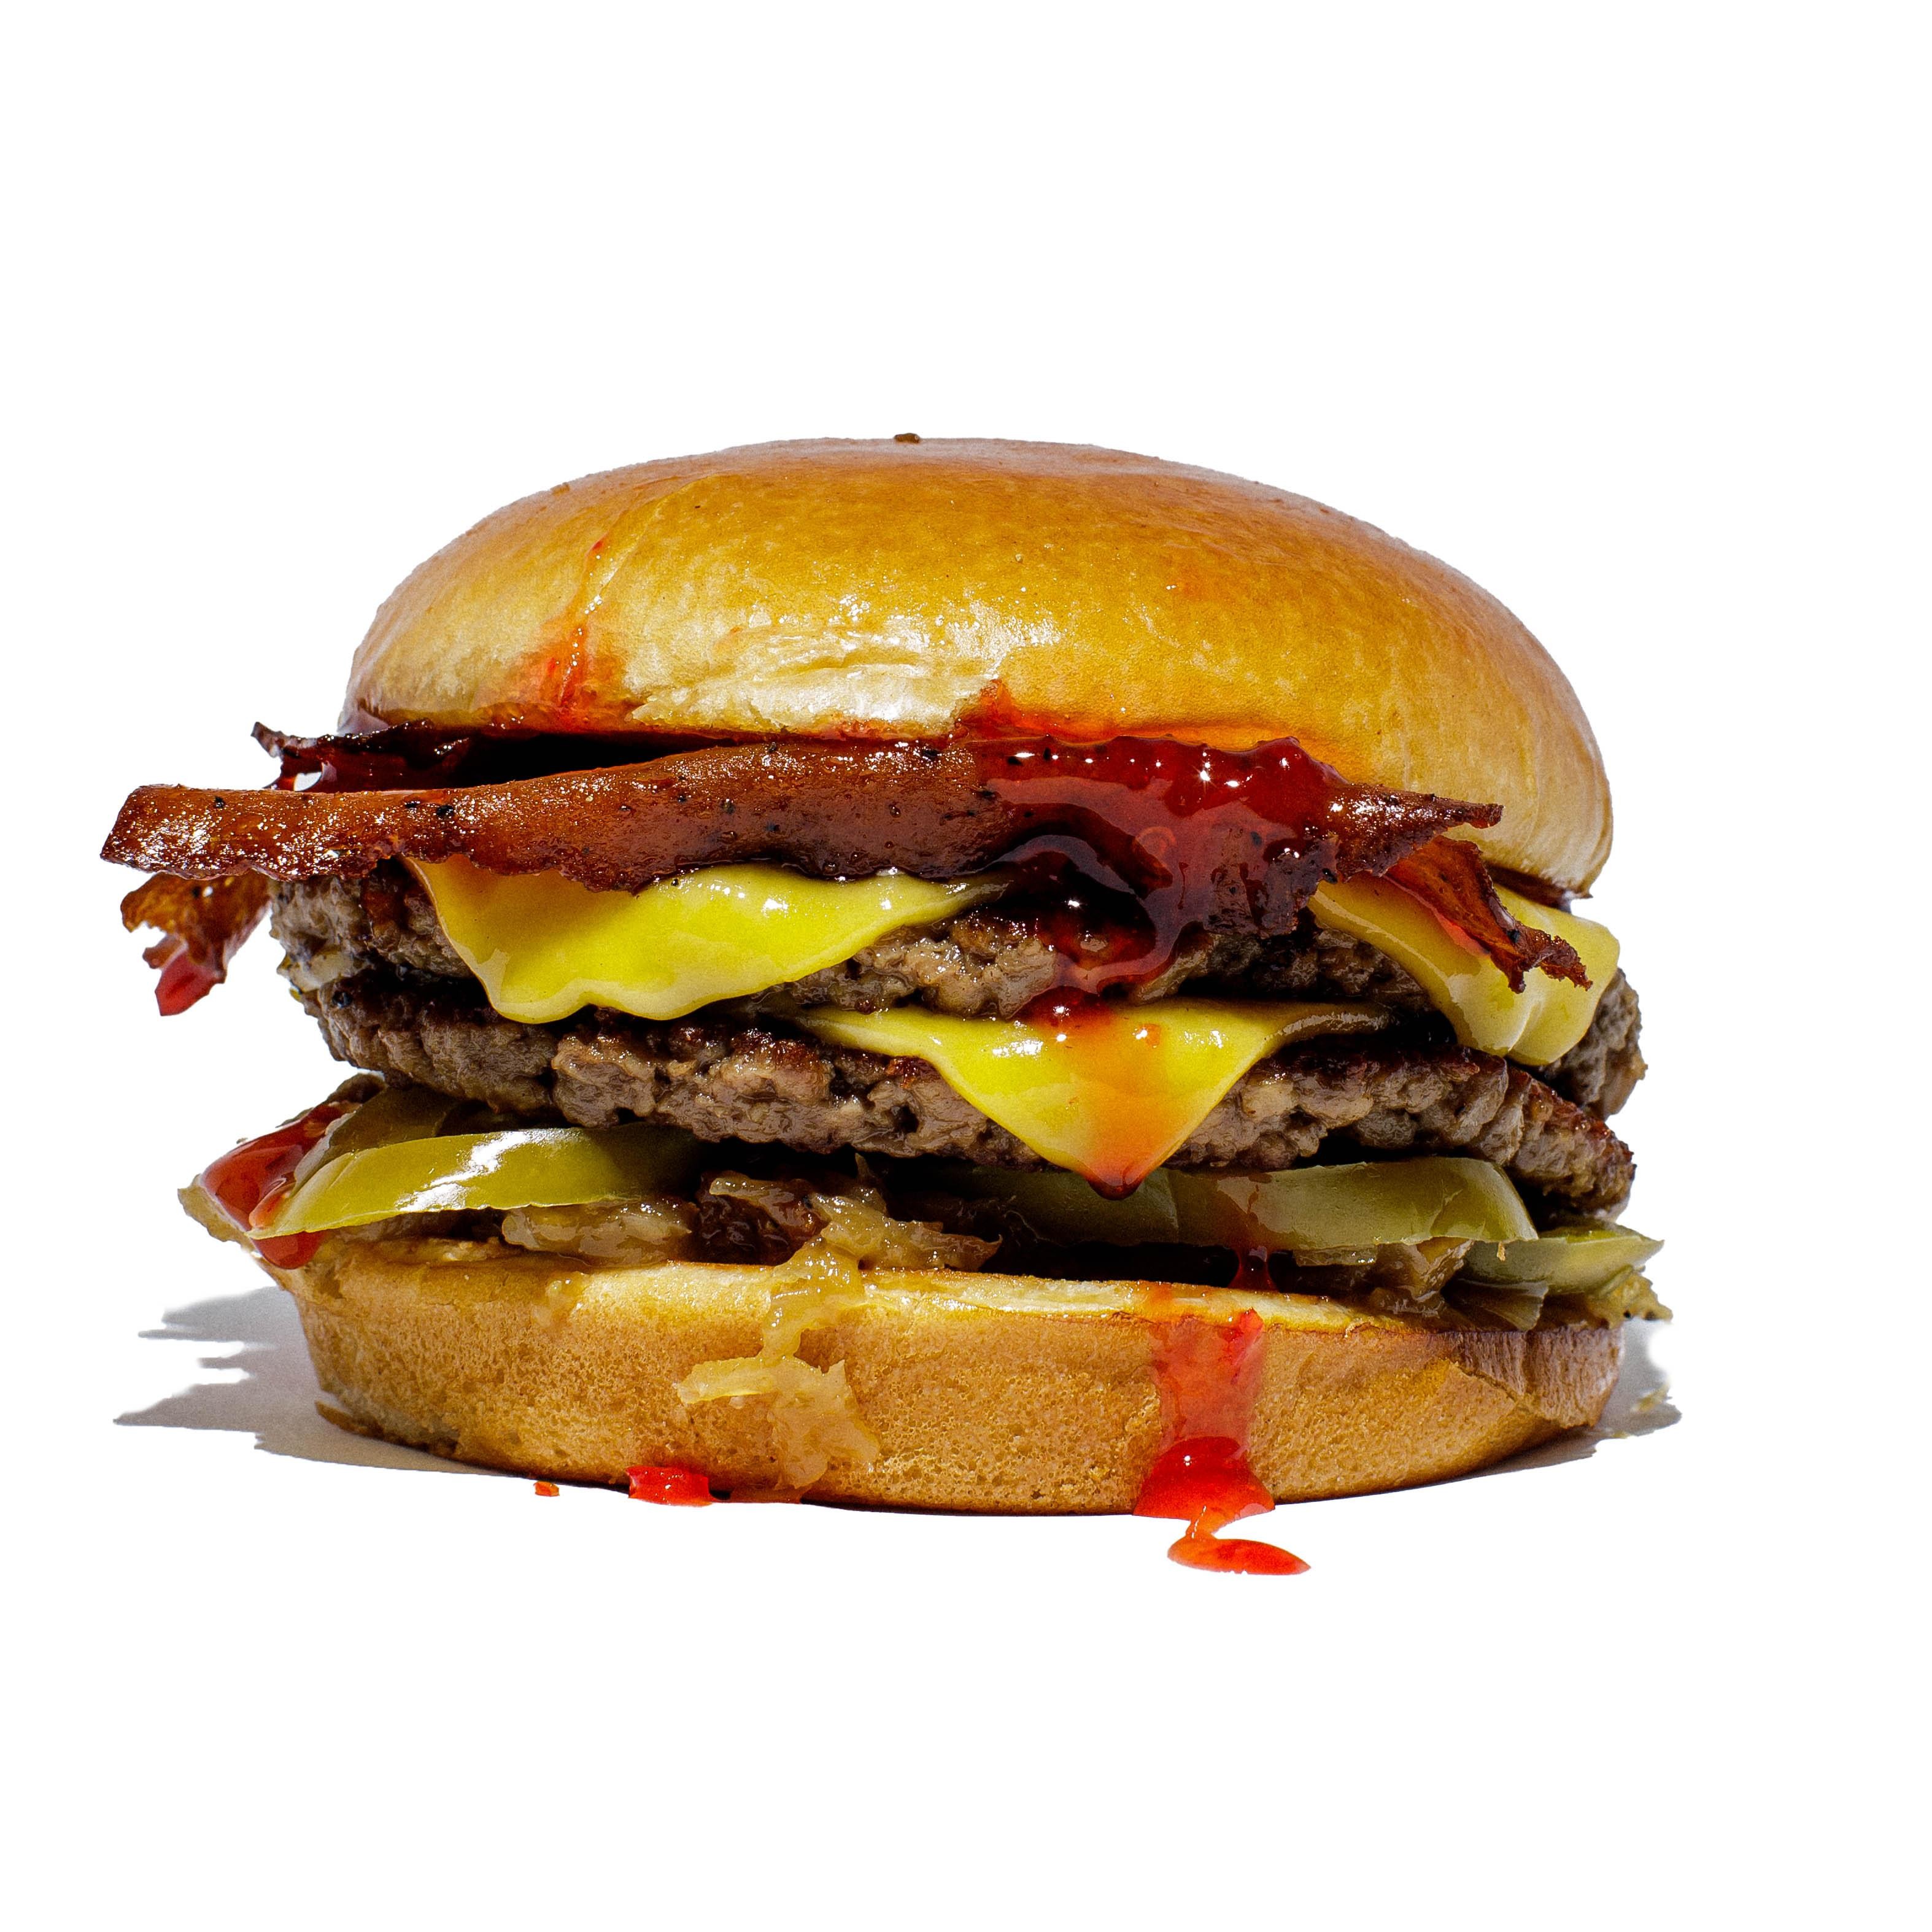 Ravenous Burger with Fries